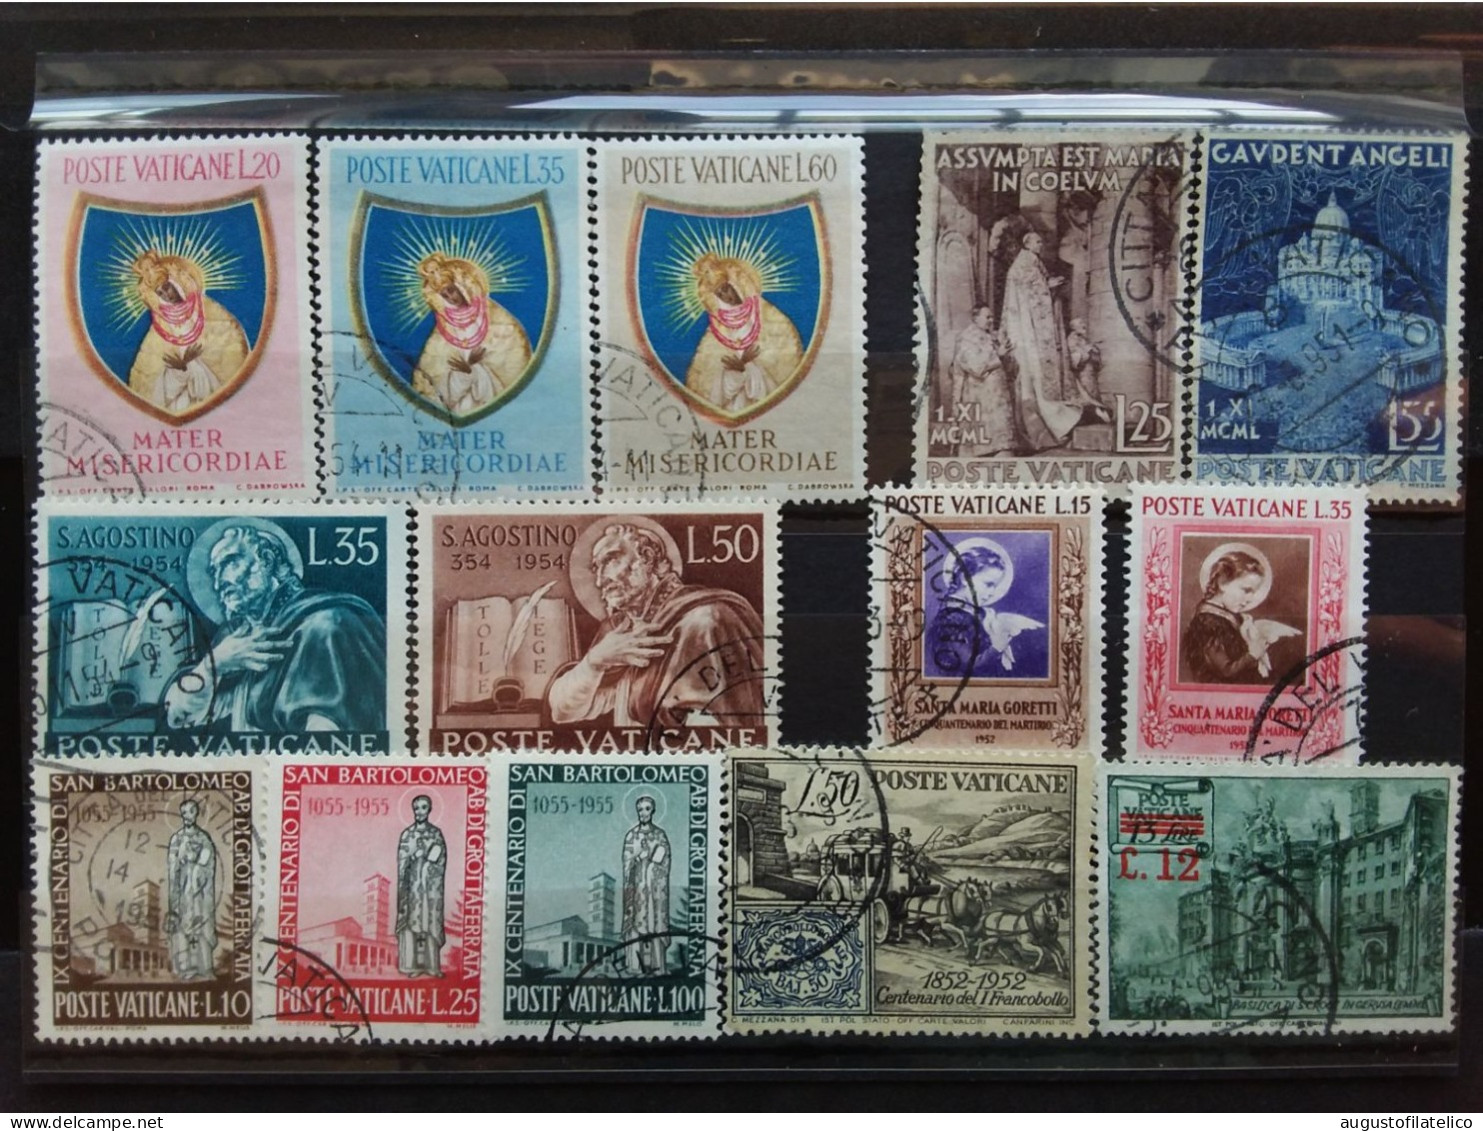 VATICANO - Serie Complete Anni '50 - Timbrati + Spese Postali - Used Stamps